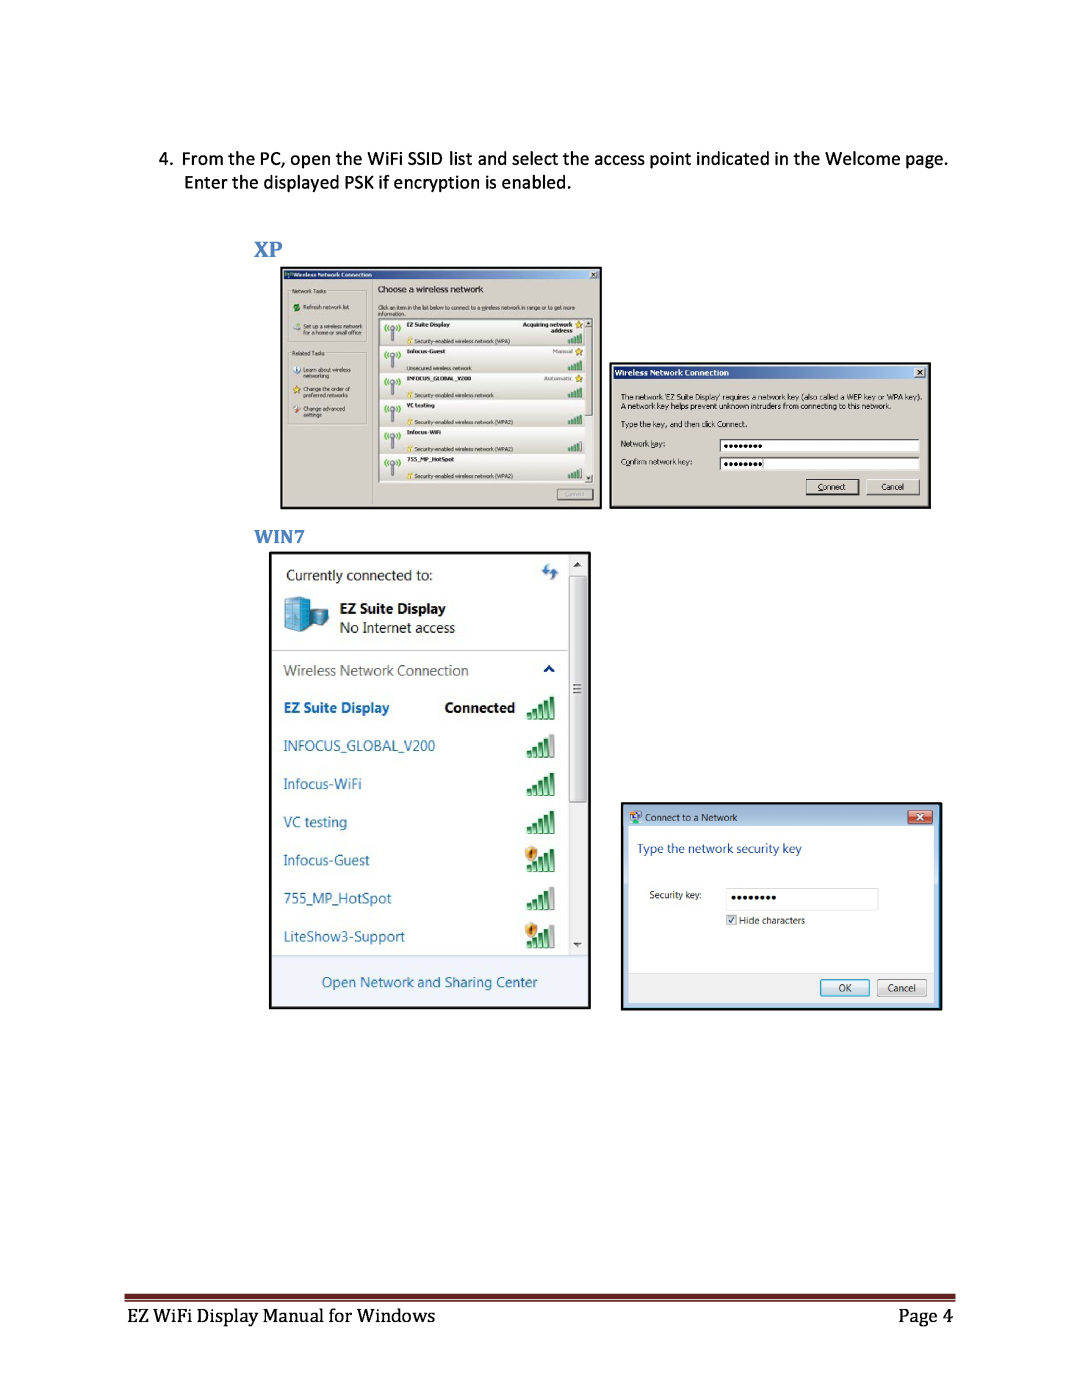 InFocus 009-1453-01 manual WIN7, EZ WiFi Display Manual for Windows, Page 